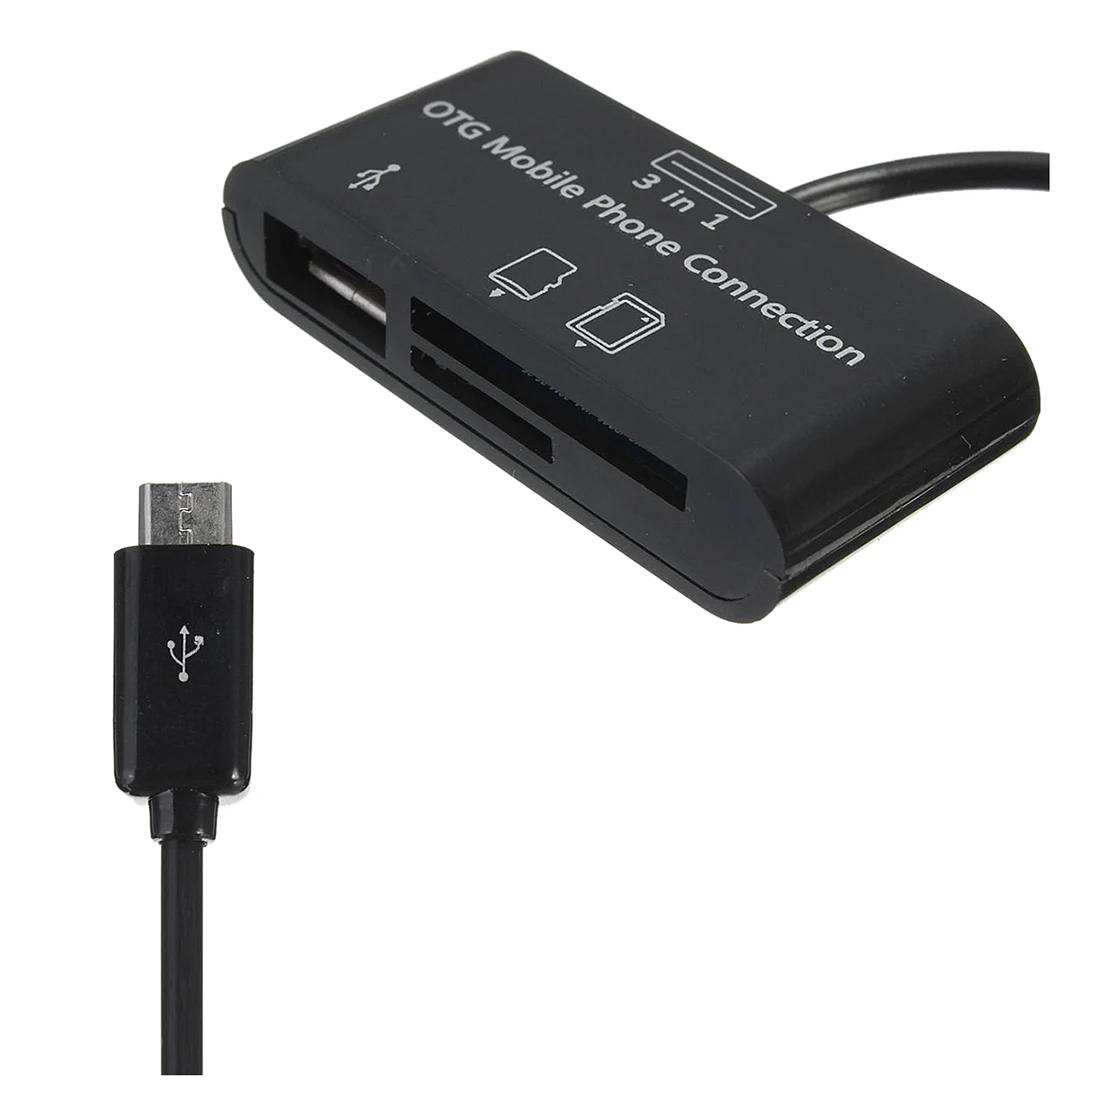 3in1 Micro USB адаптер SD card reader карты для OTG Мобильный телефон новый черный